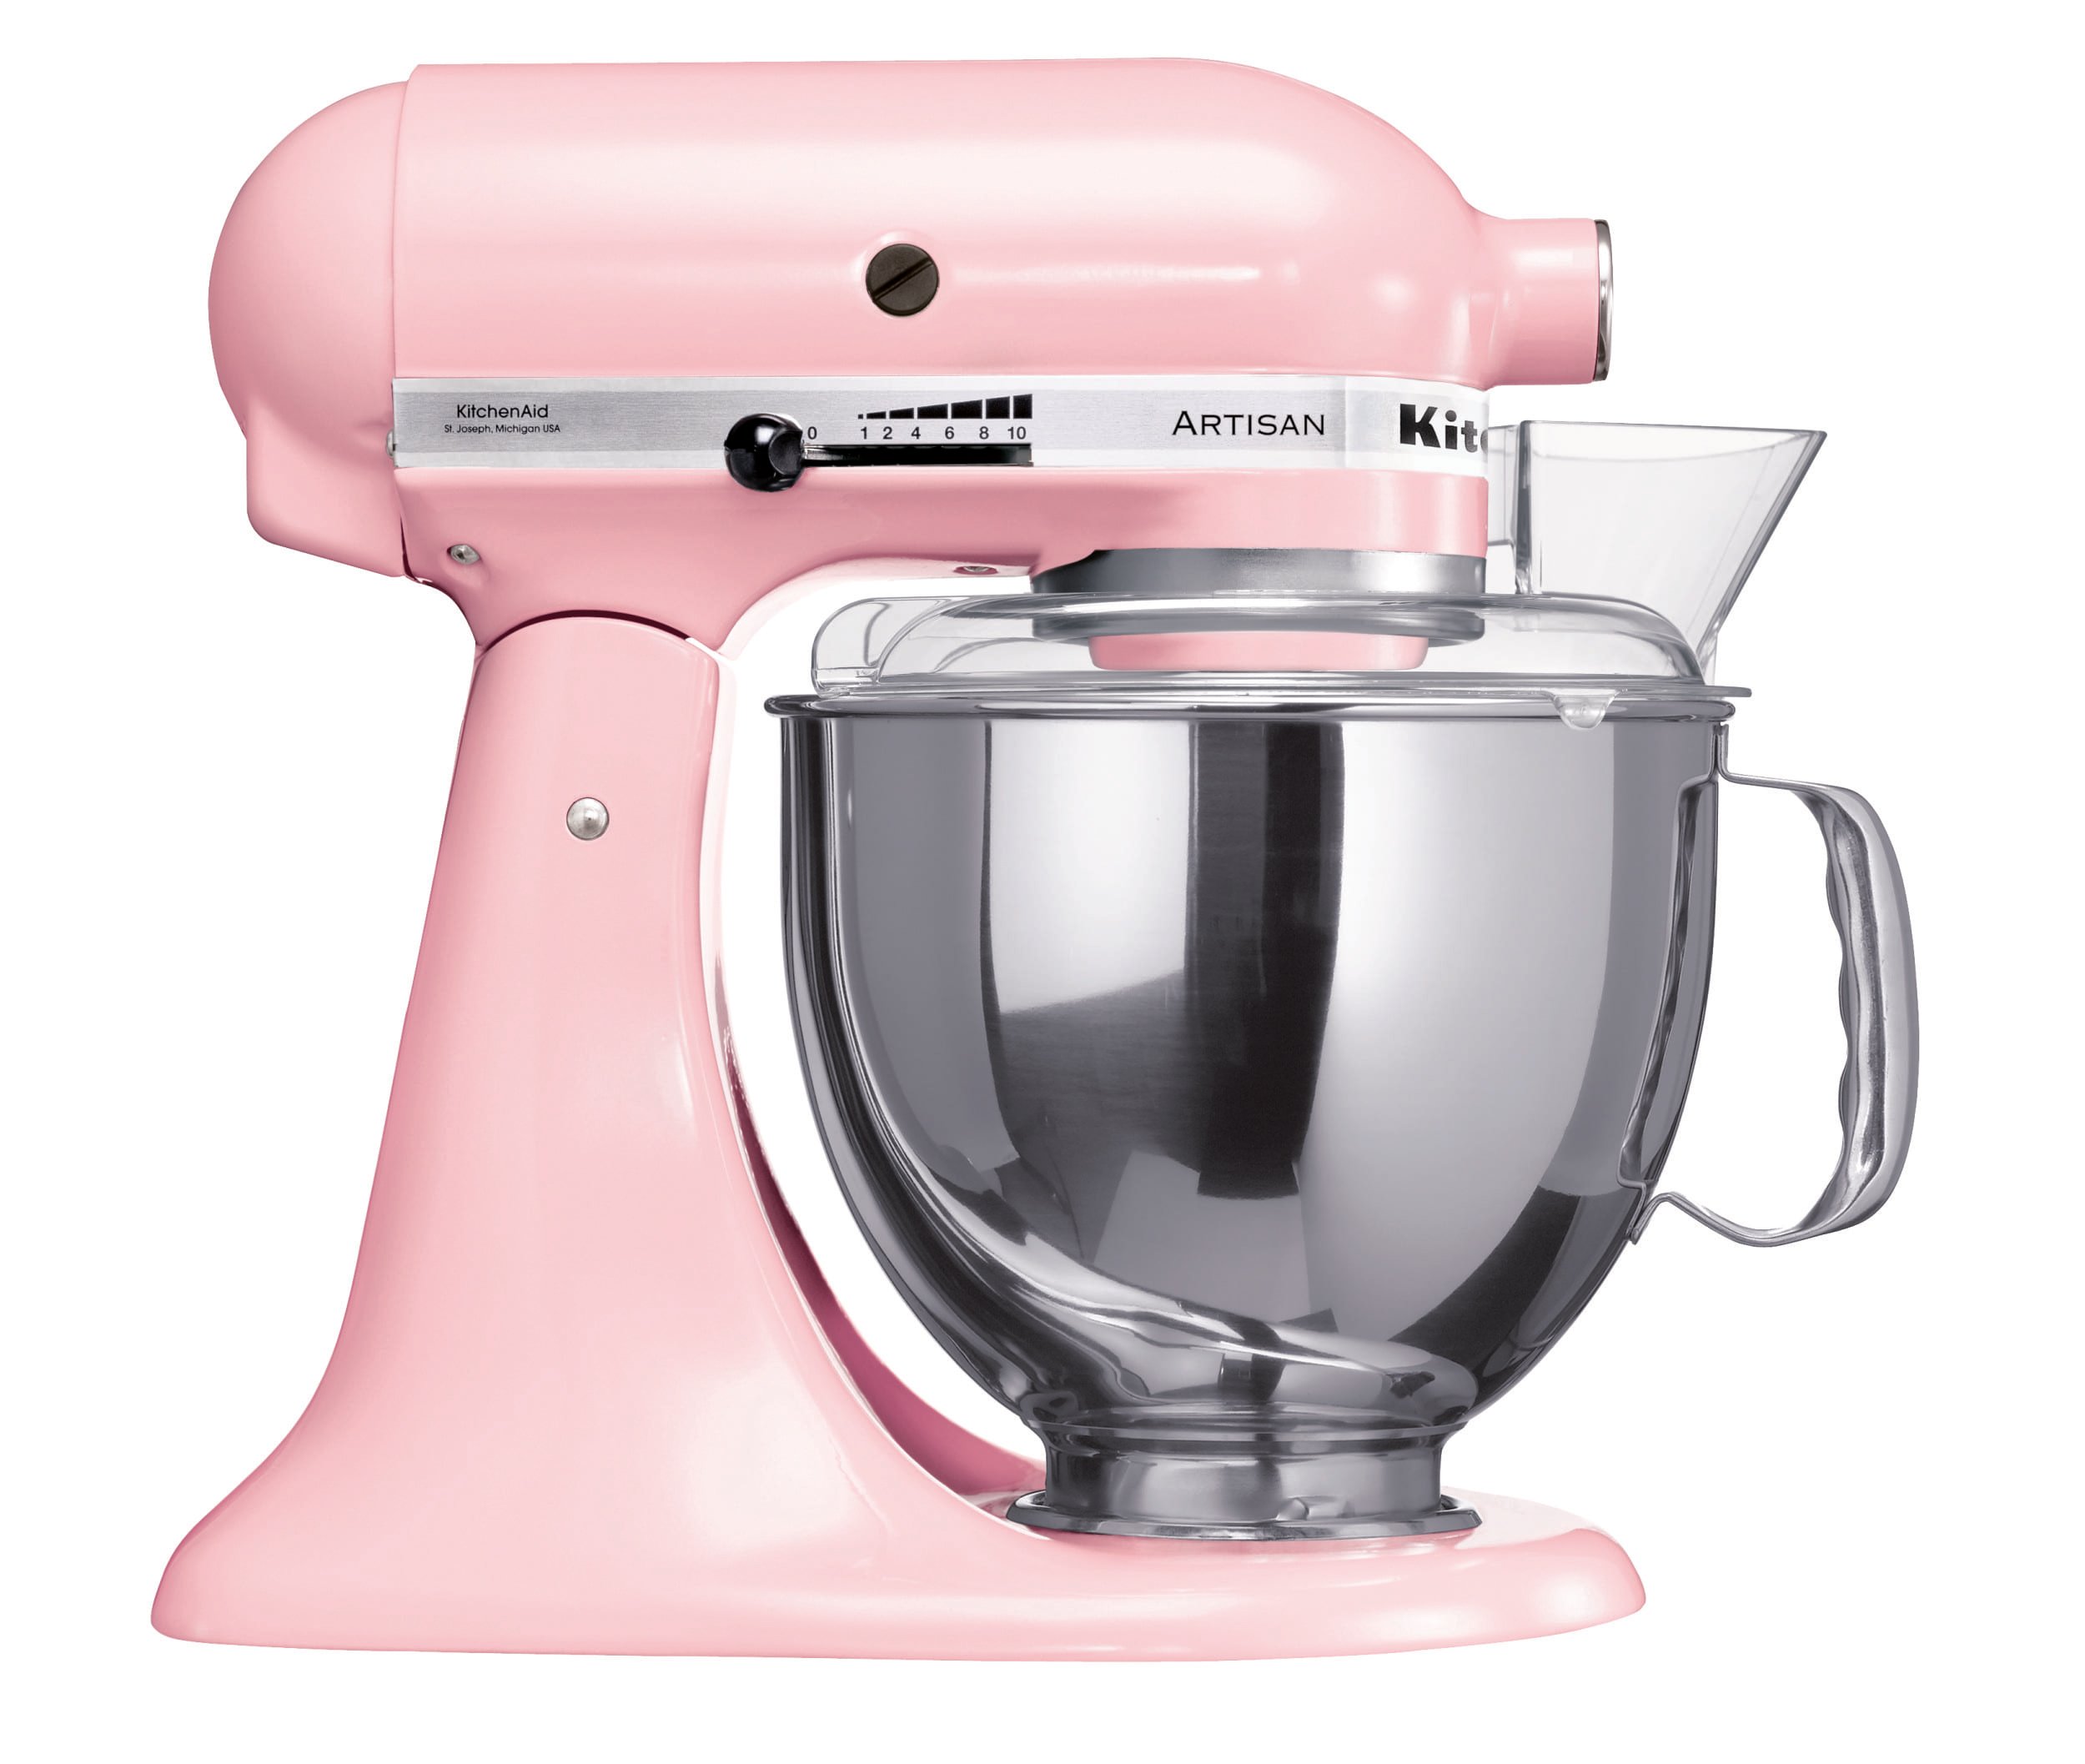 turnering pakke rutine KitchenAid Think Pink for Pink October Breast Cancer Awareness Winner